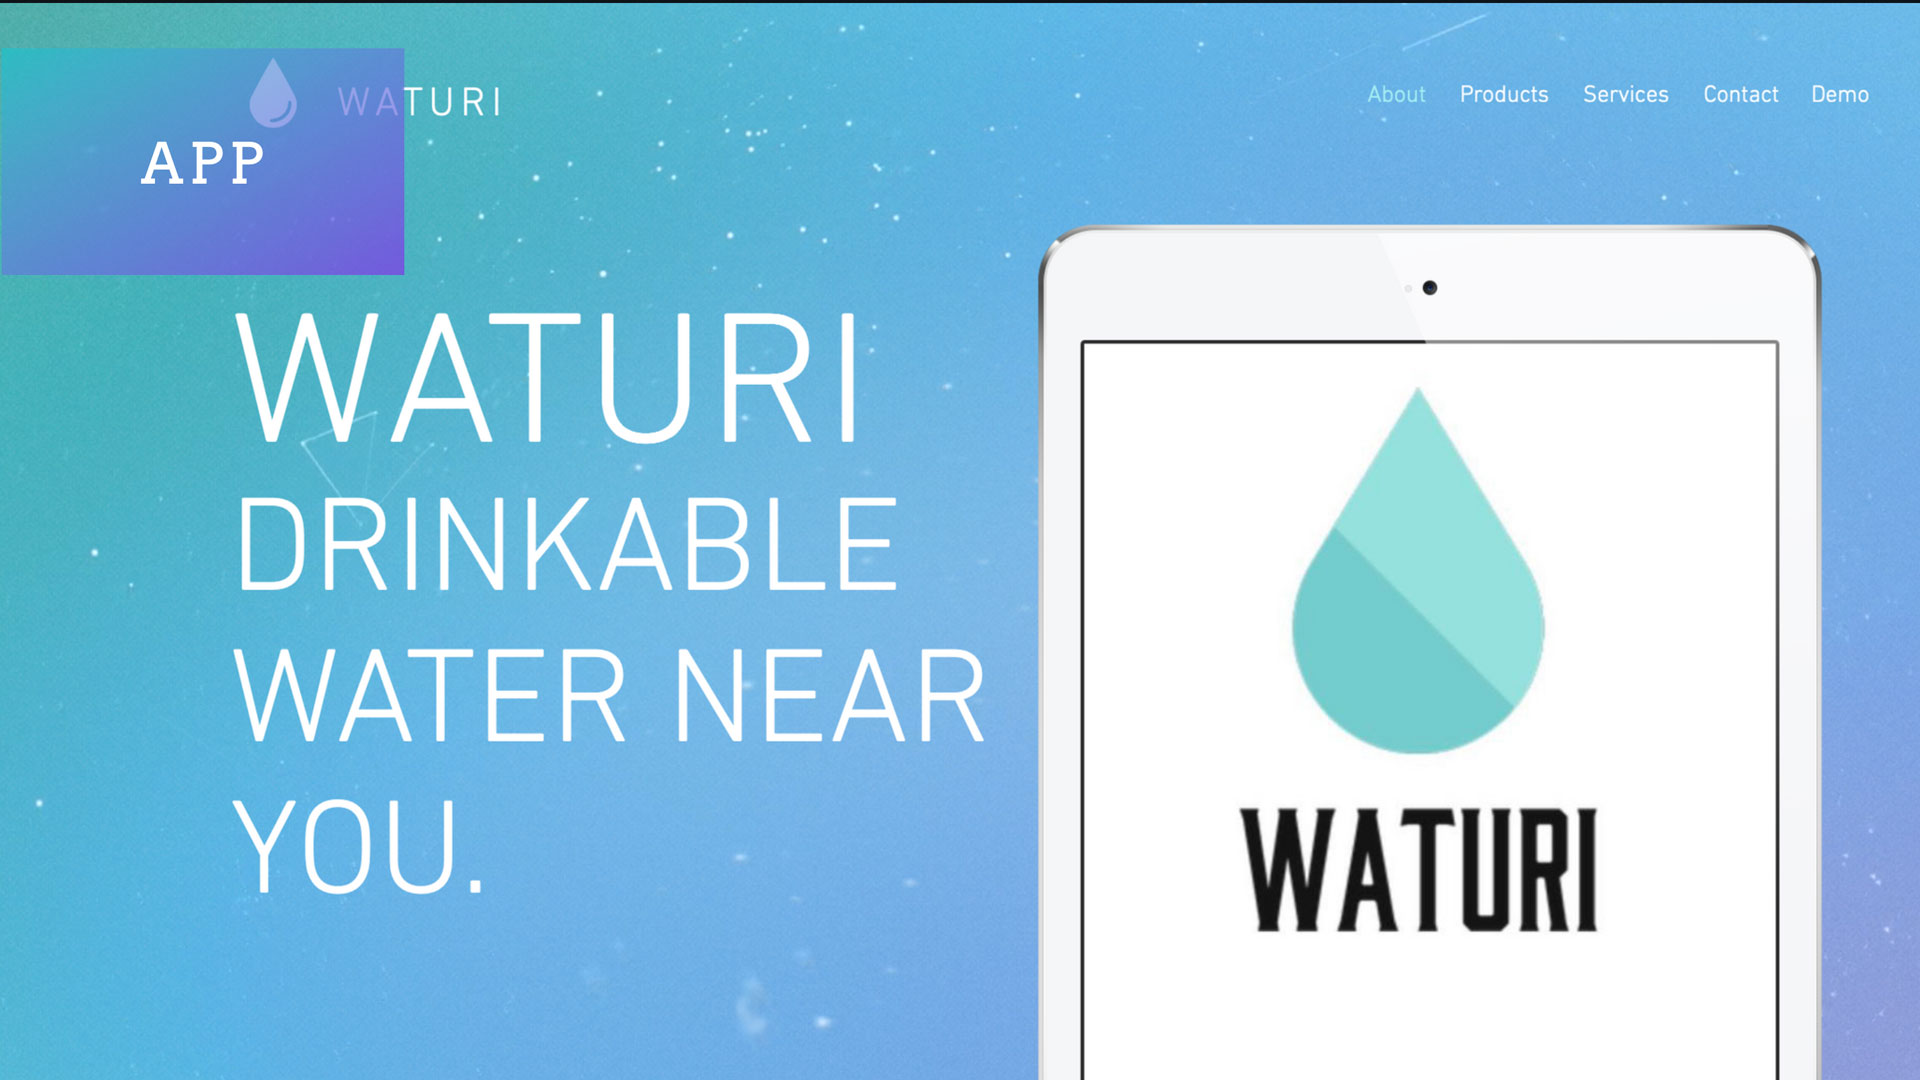 Lema de Waturi: Water in demand, anytime, anywhere.